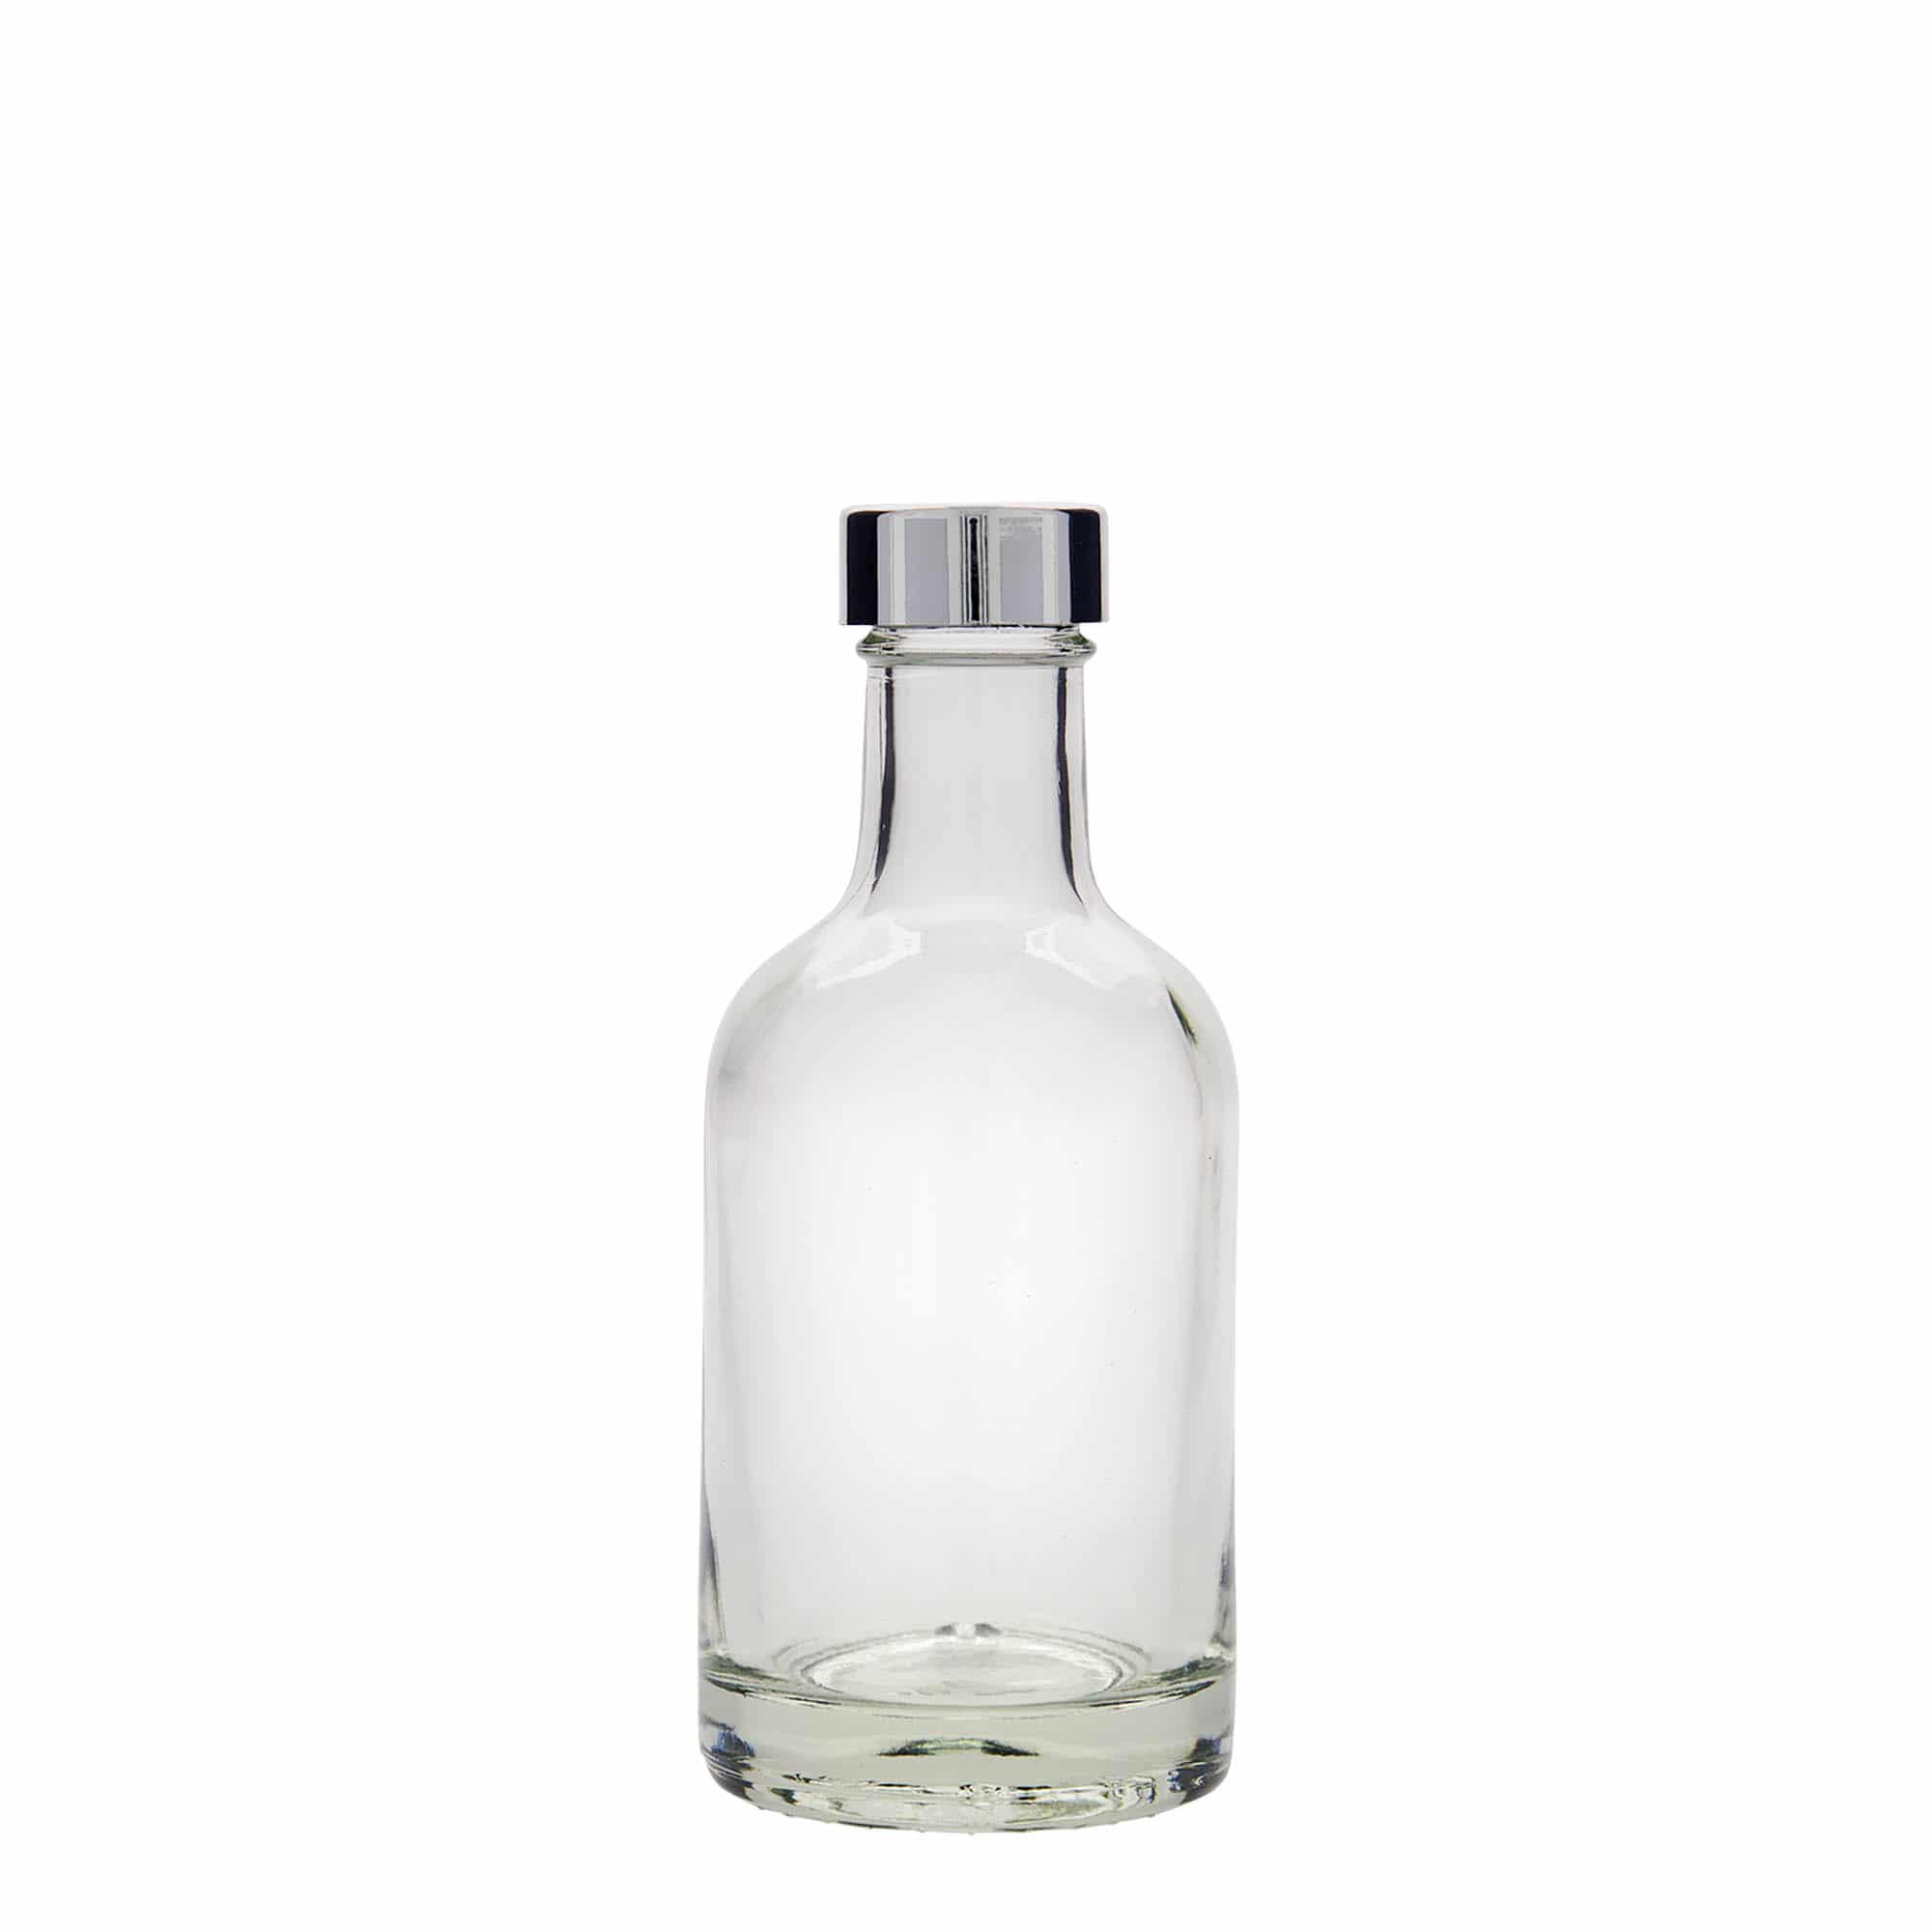 200 ml glass bottle 'First Class', closure: GPI 28